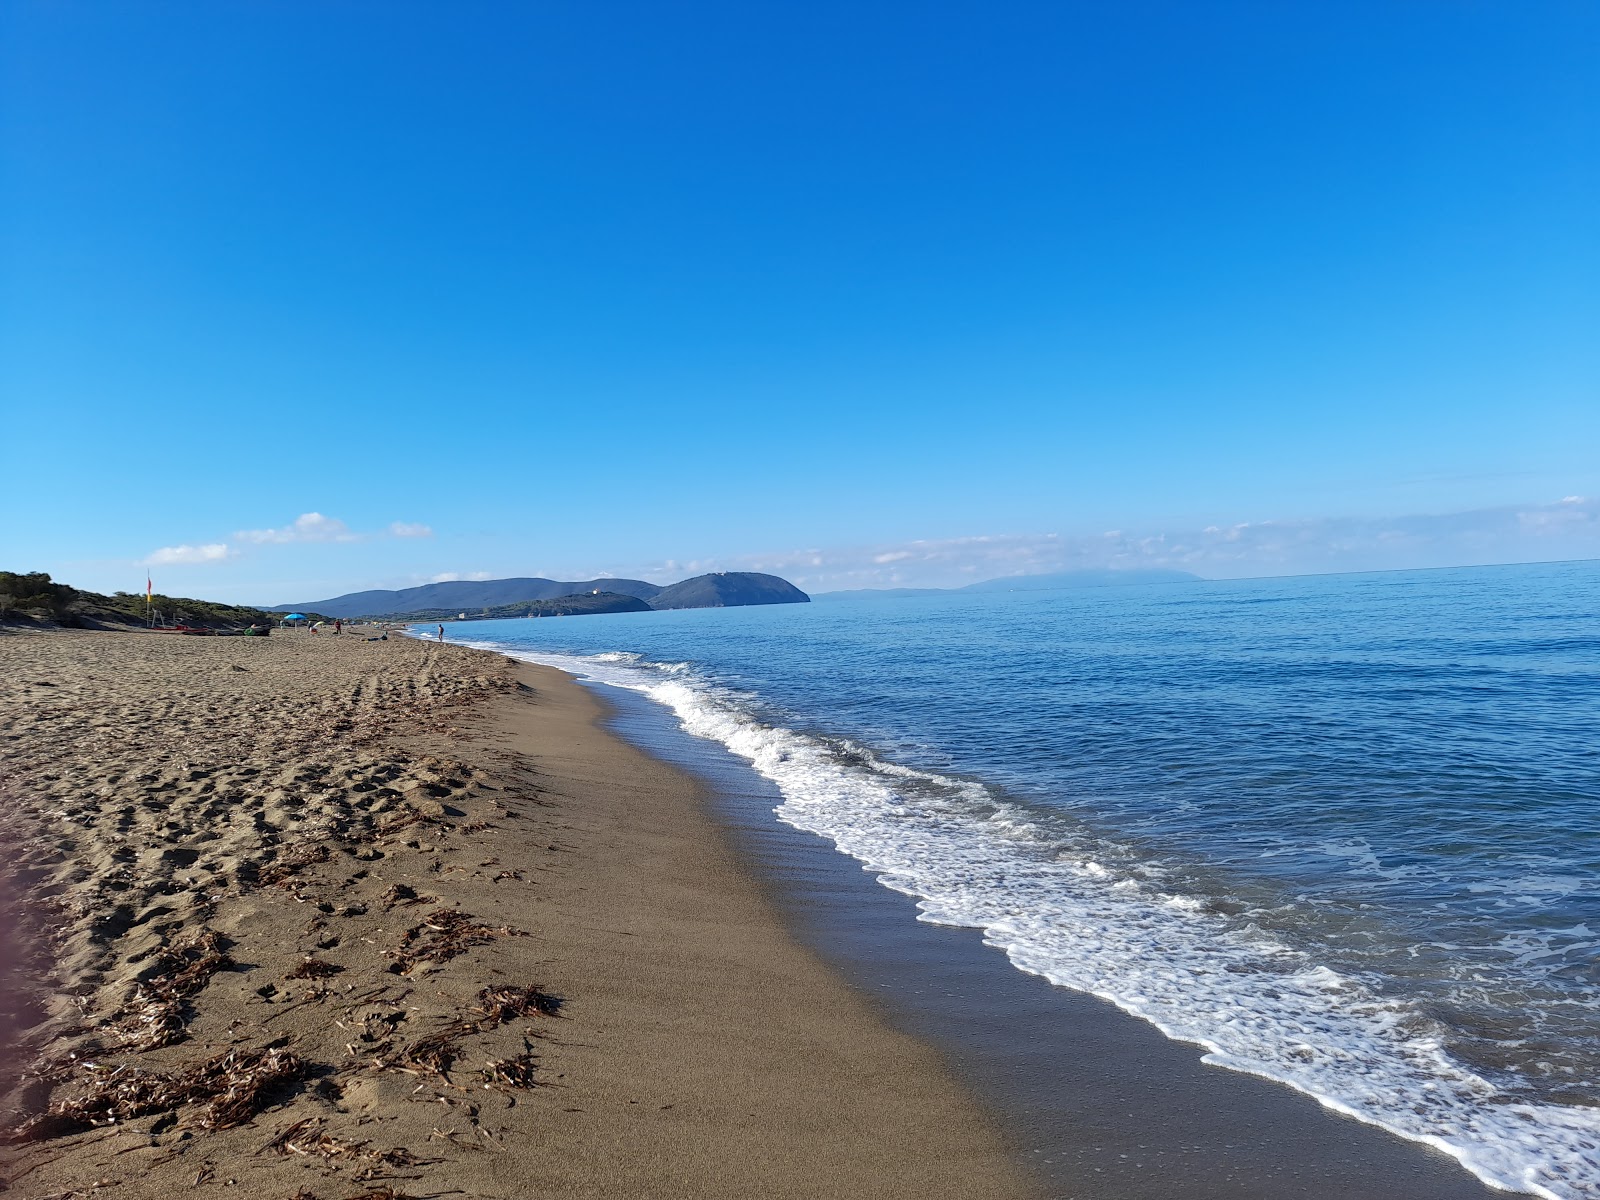 Fotografie cu Spiaggia di Rimigliano II cu o suprafață de nisip maro